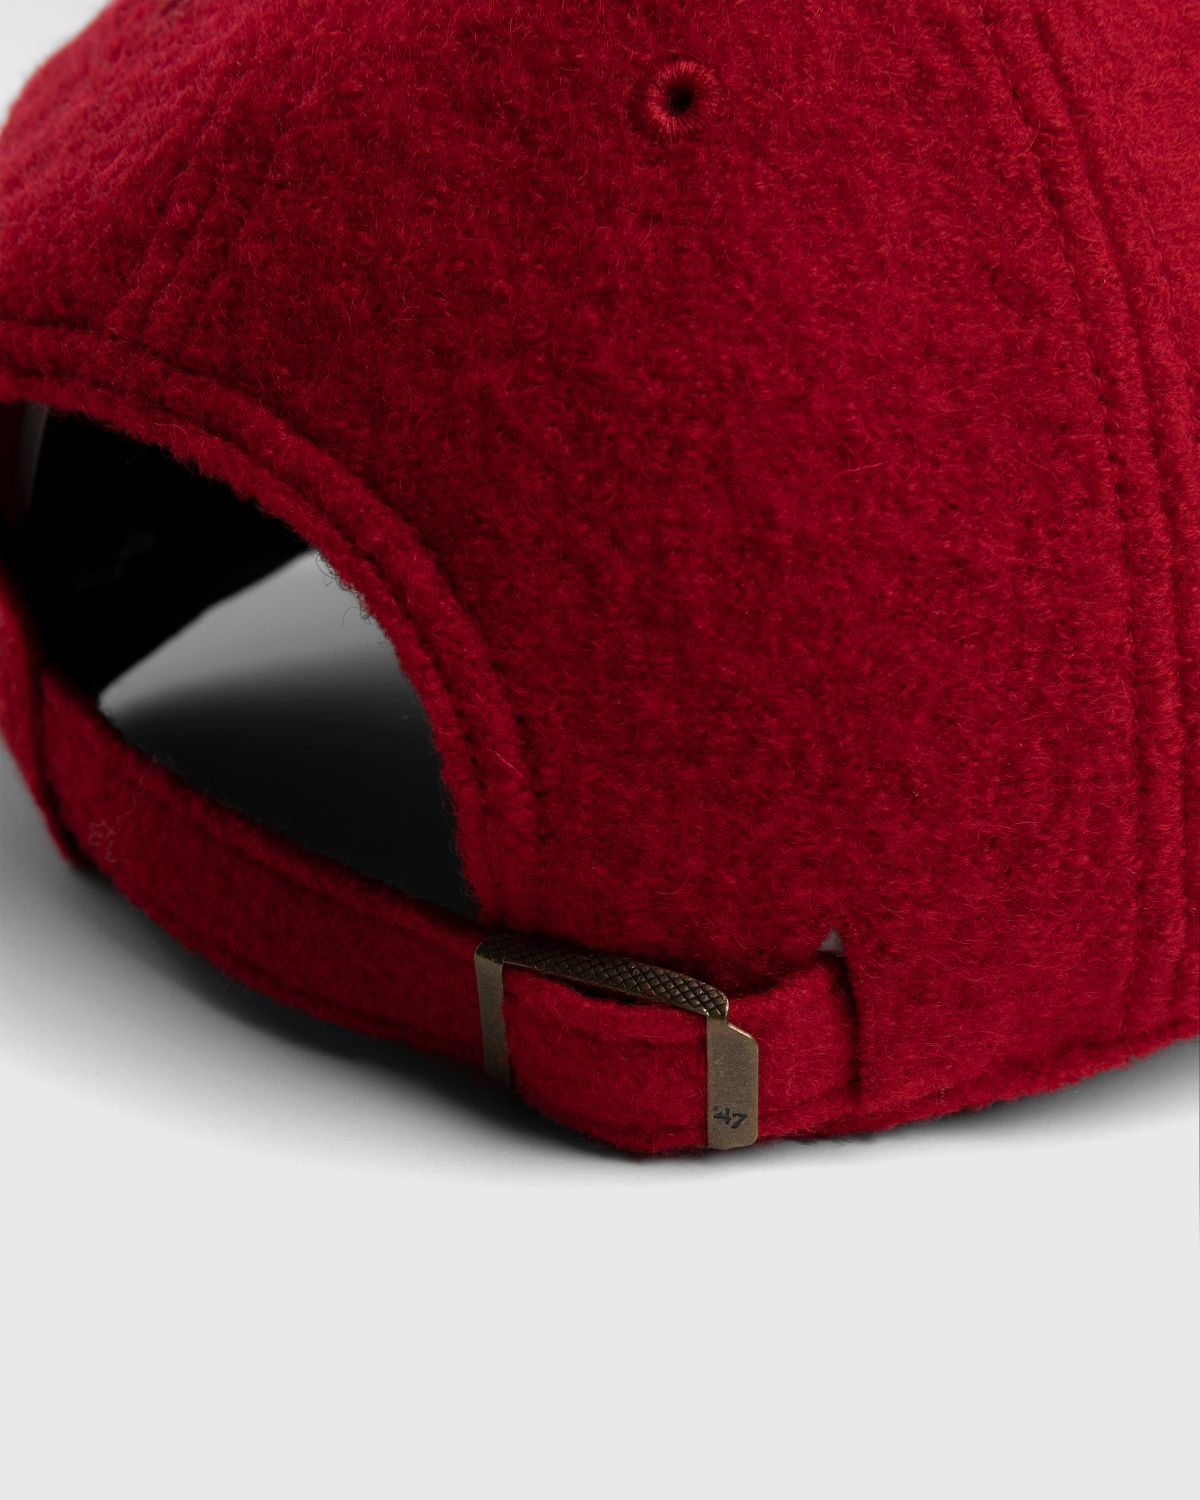 J. Press x '47 x Highsnobiety – Cap Red - Caps - Red - Image 6